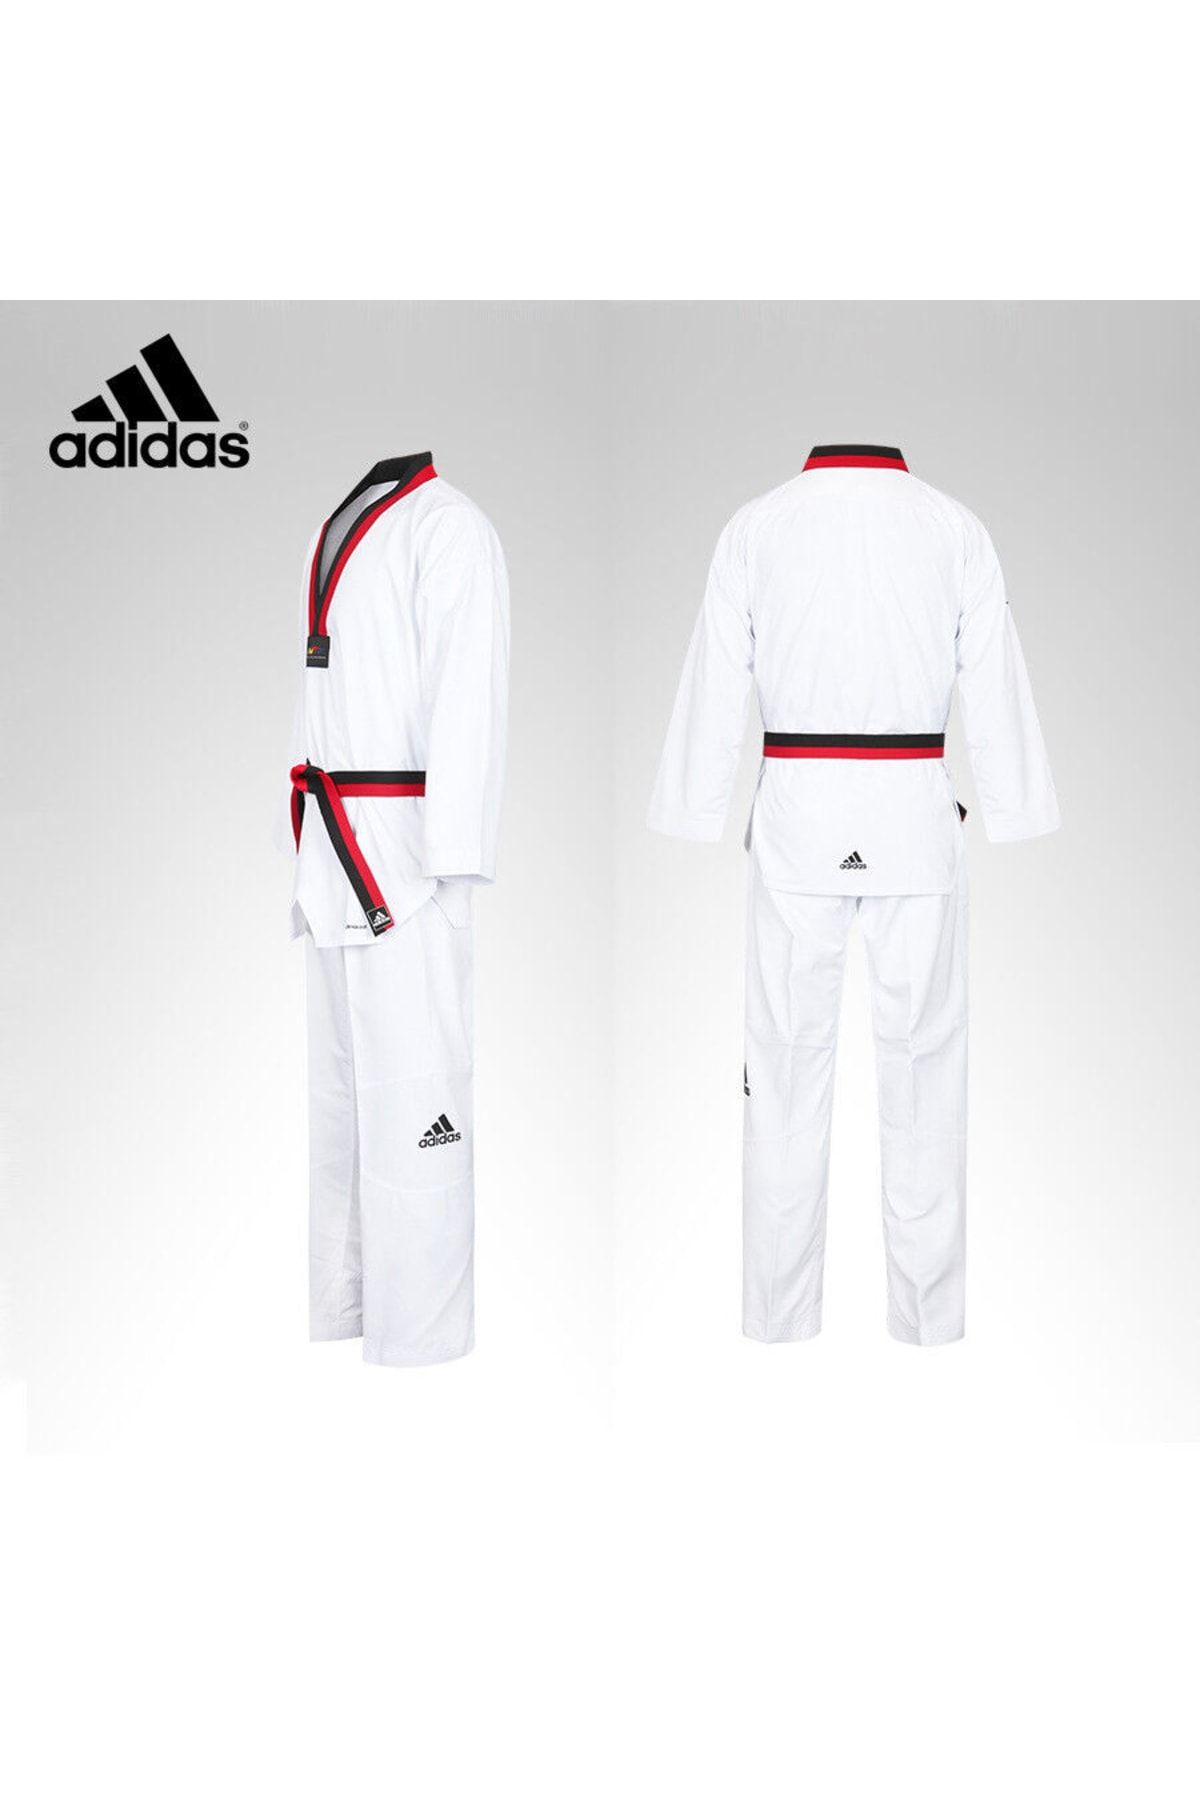 adidas Adıstart Pum Yaka Taekwondo Elbisesi - Adıts01